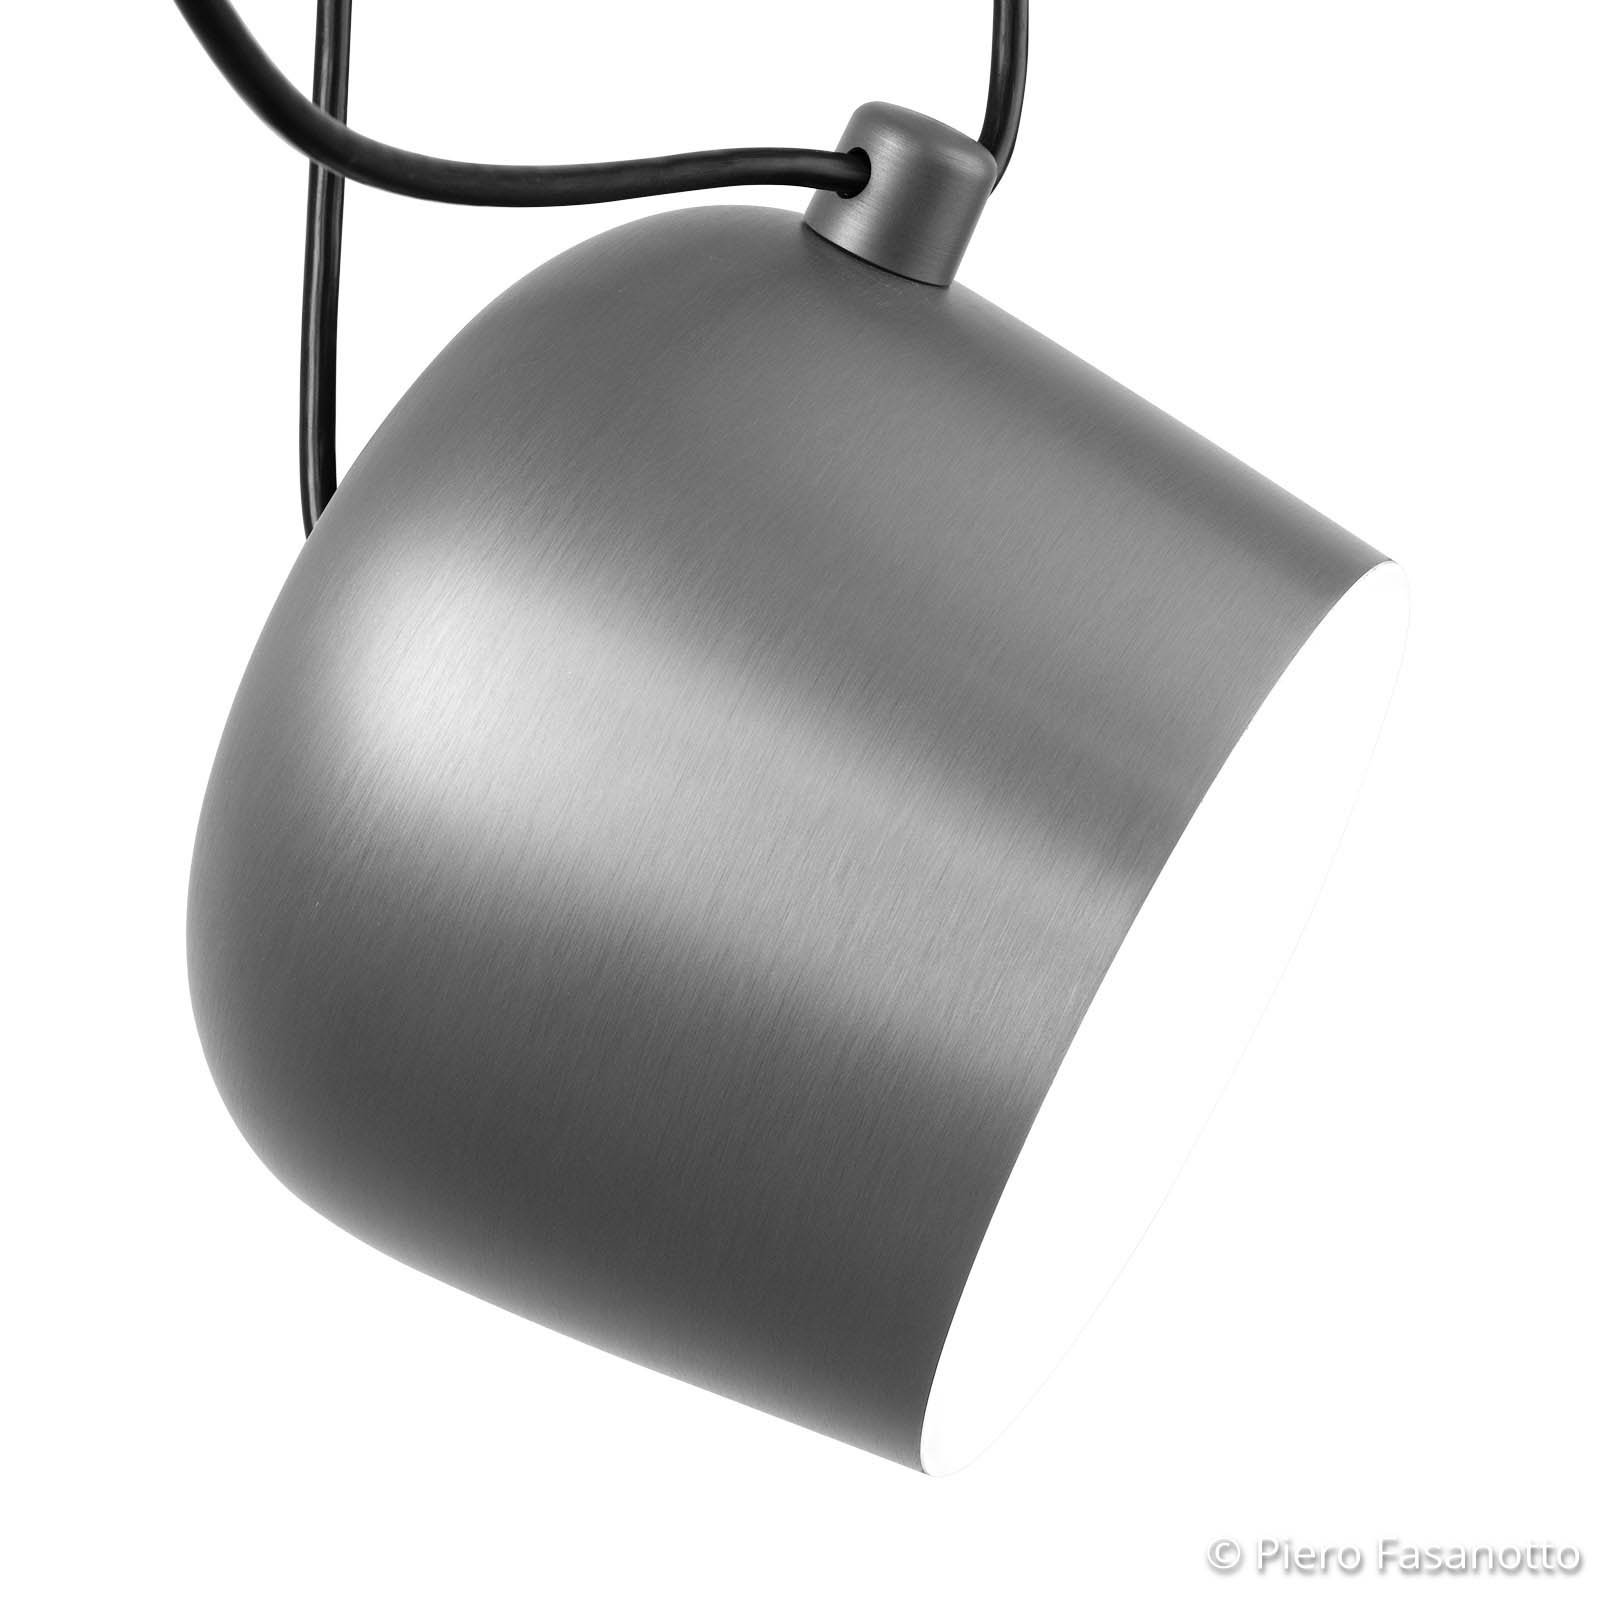 FLOS Aim -LED-riippuvalaisin light silver